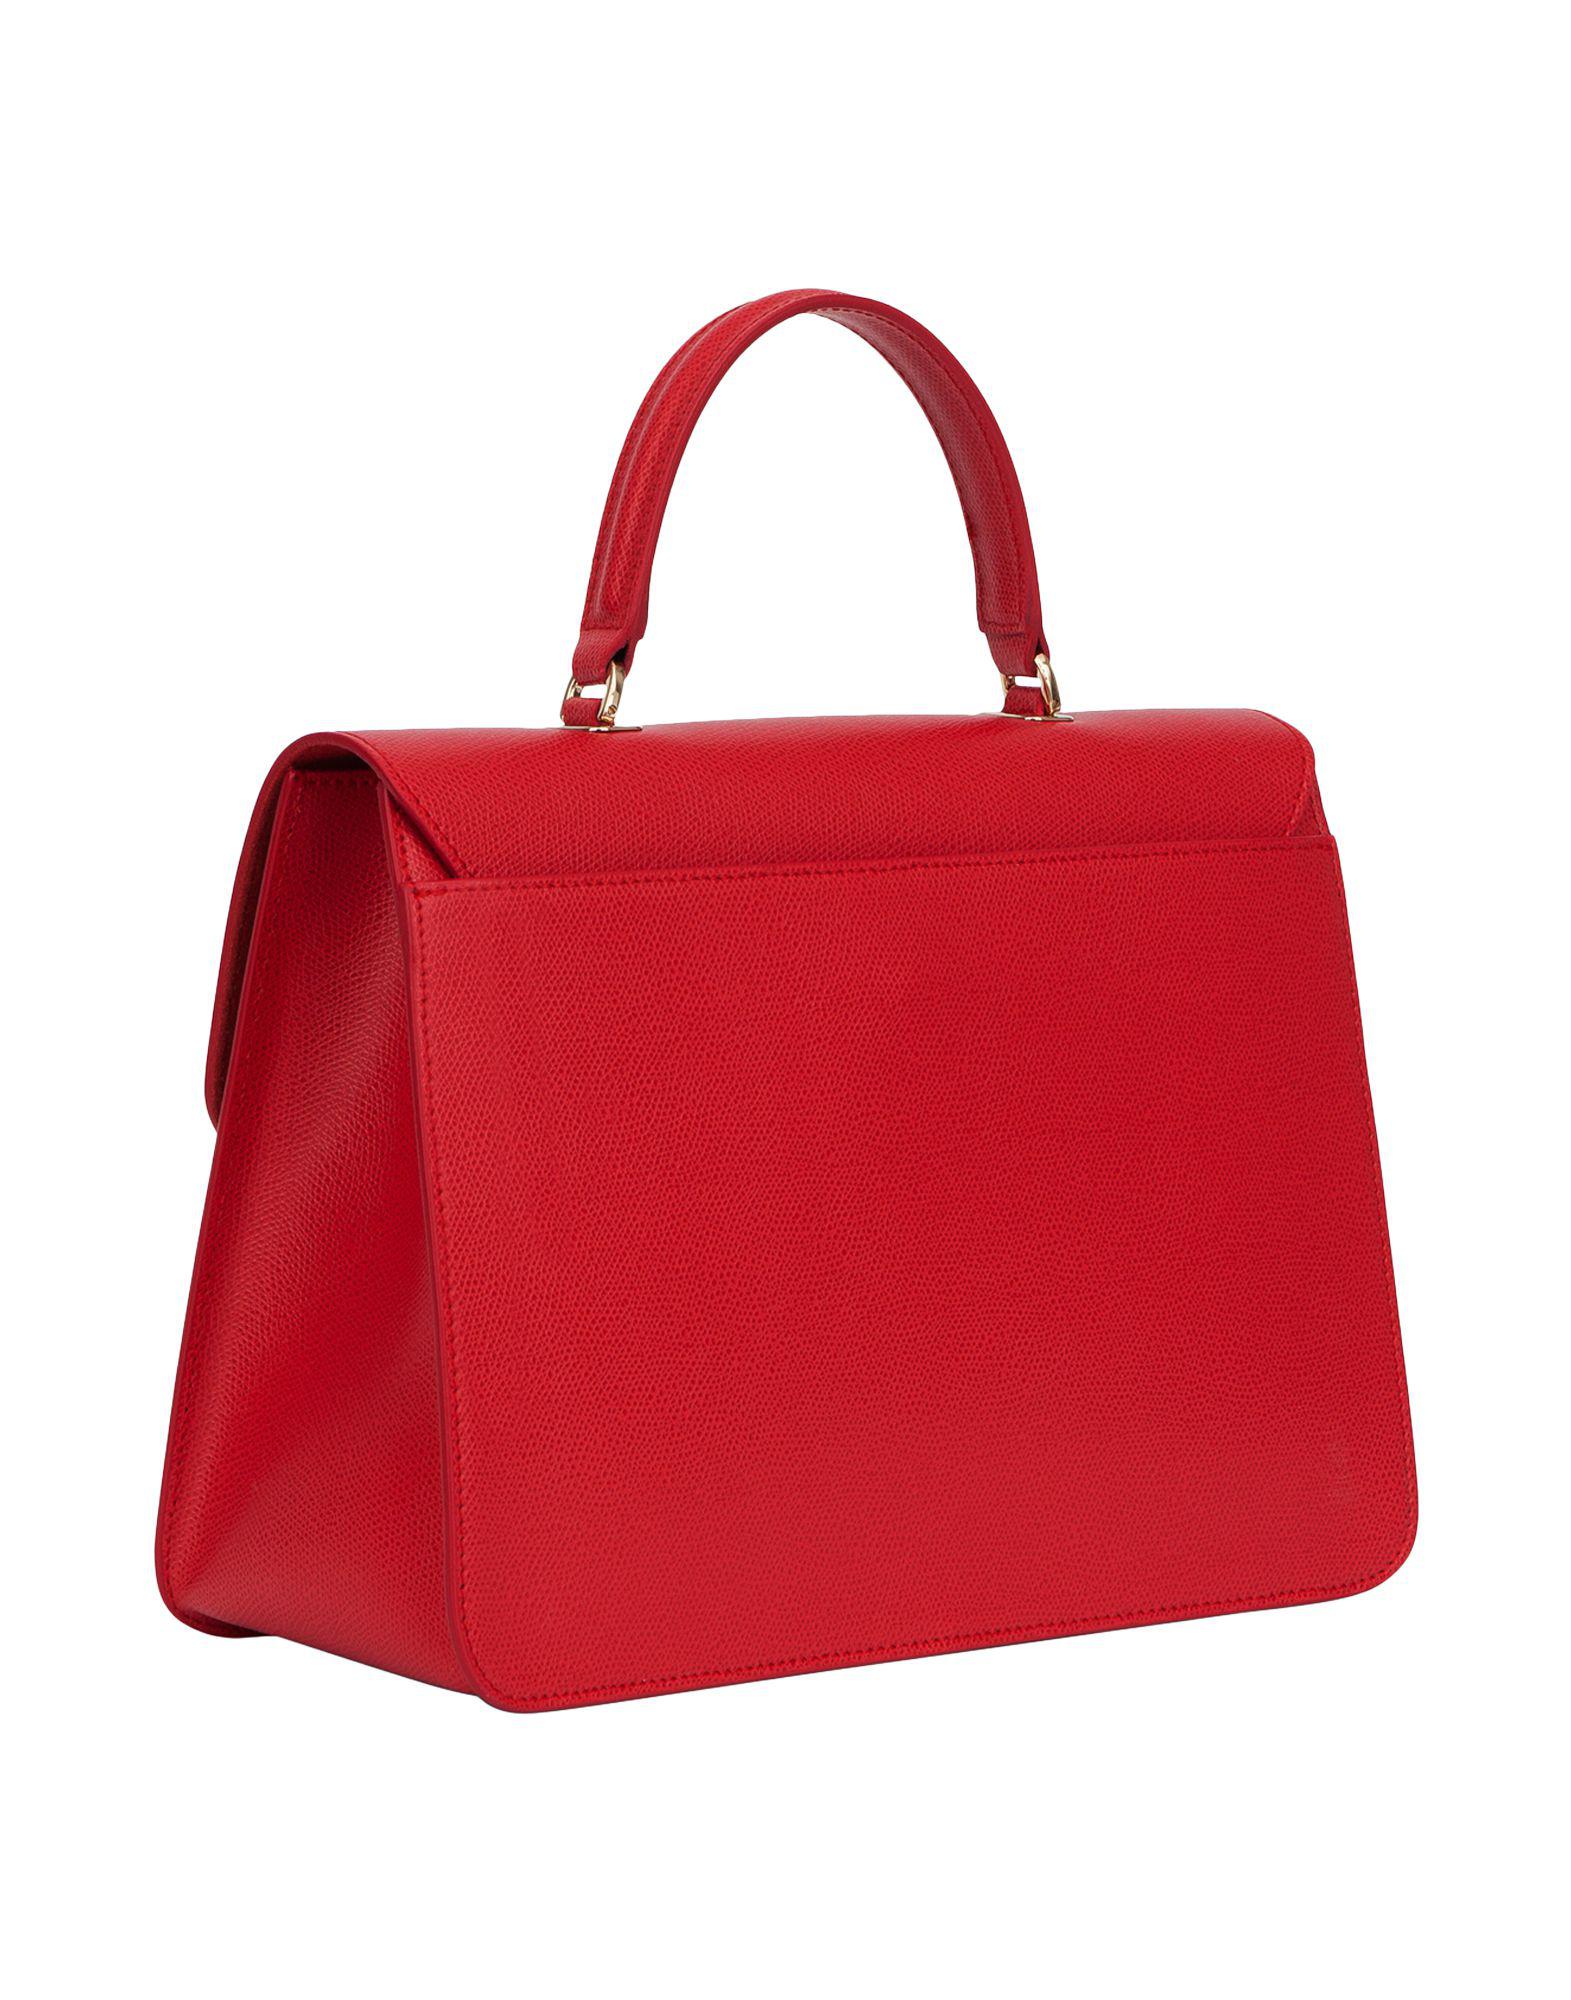 Furla Leather Handbag in Red - Lyst